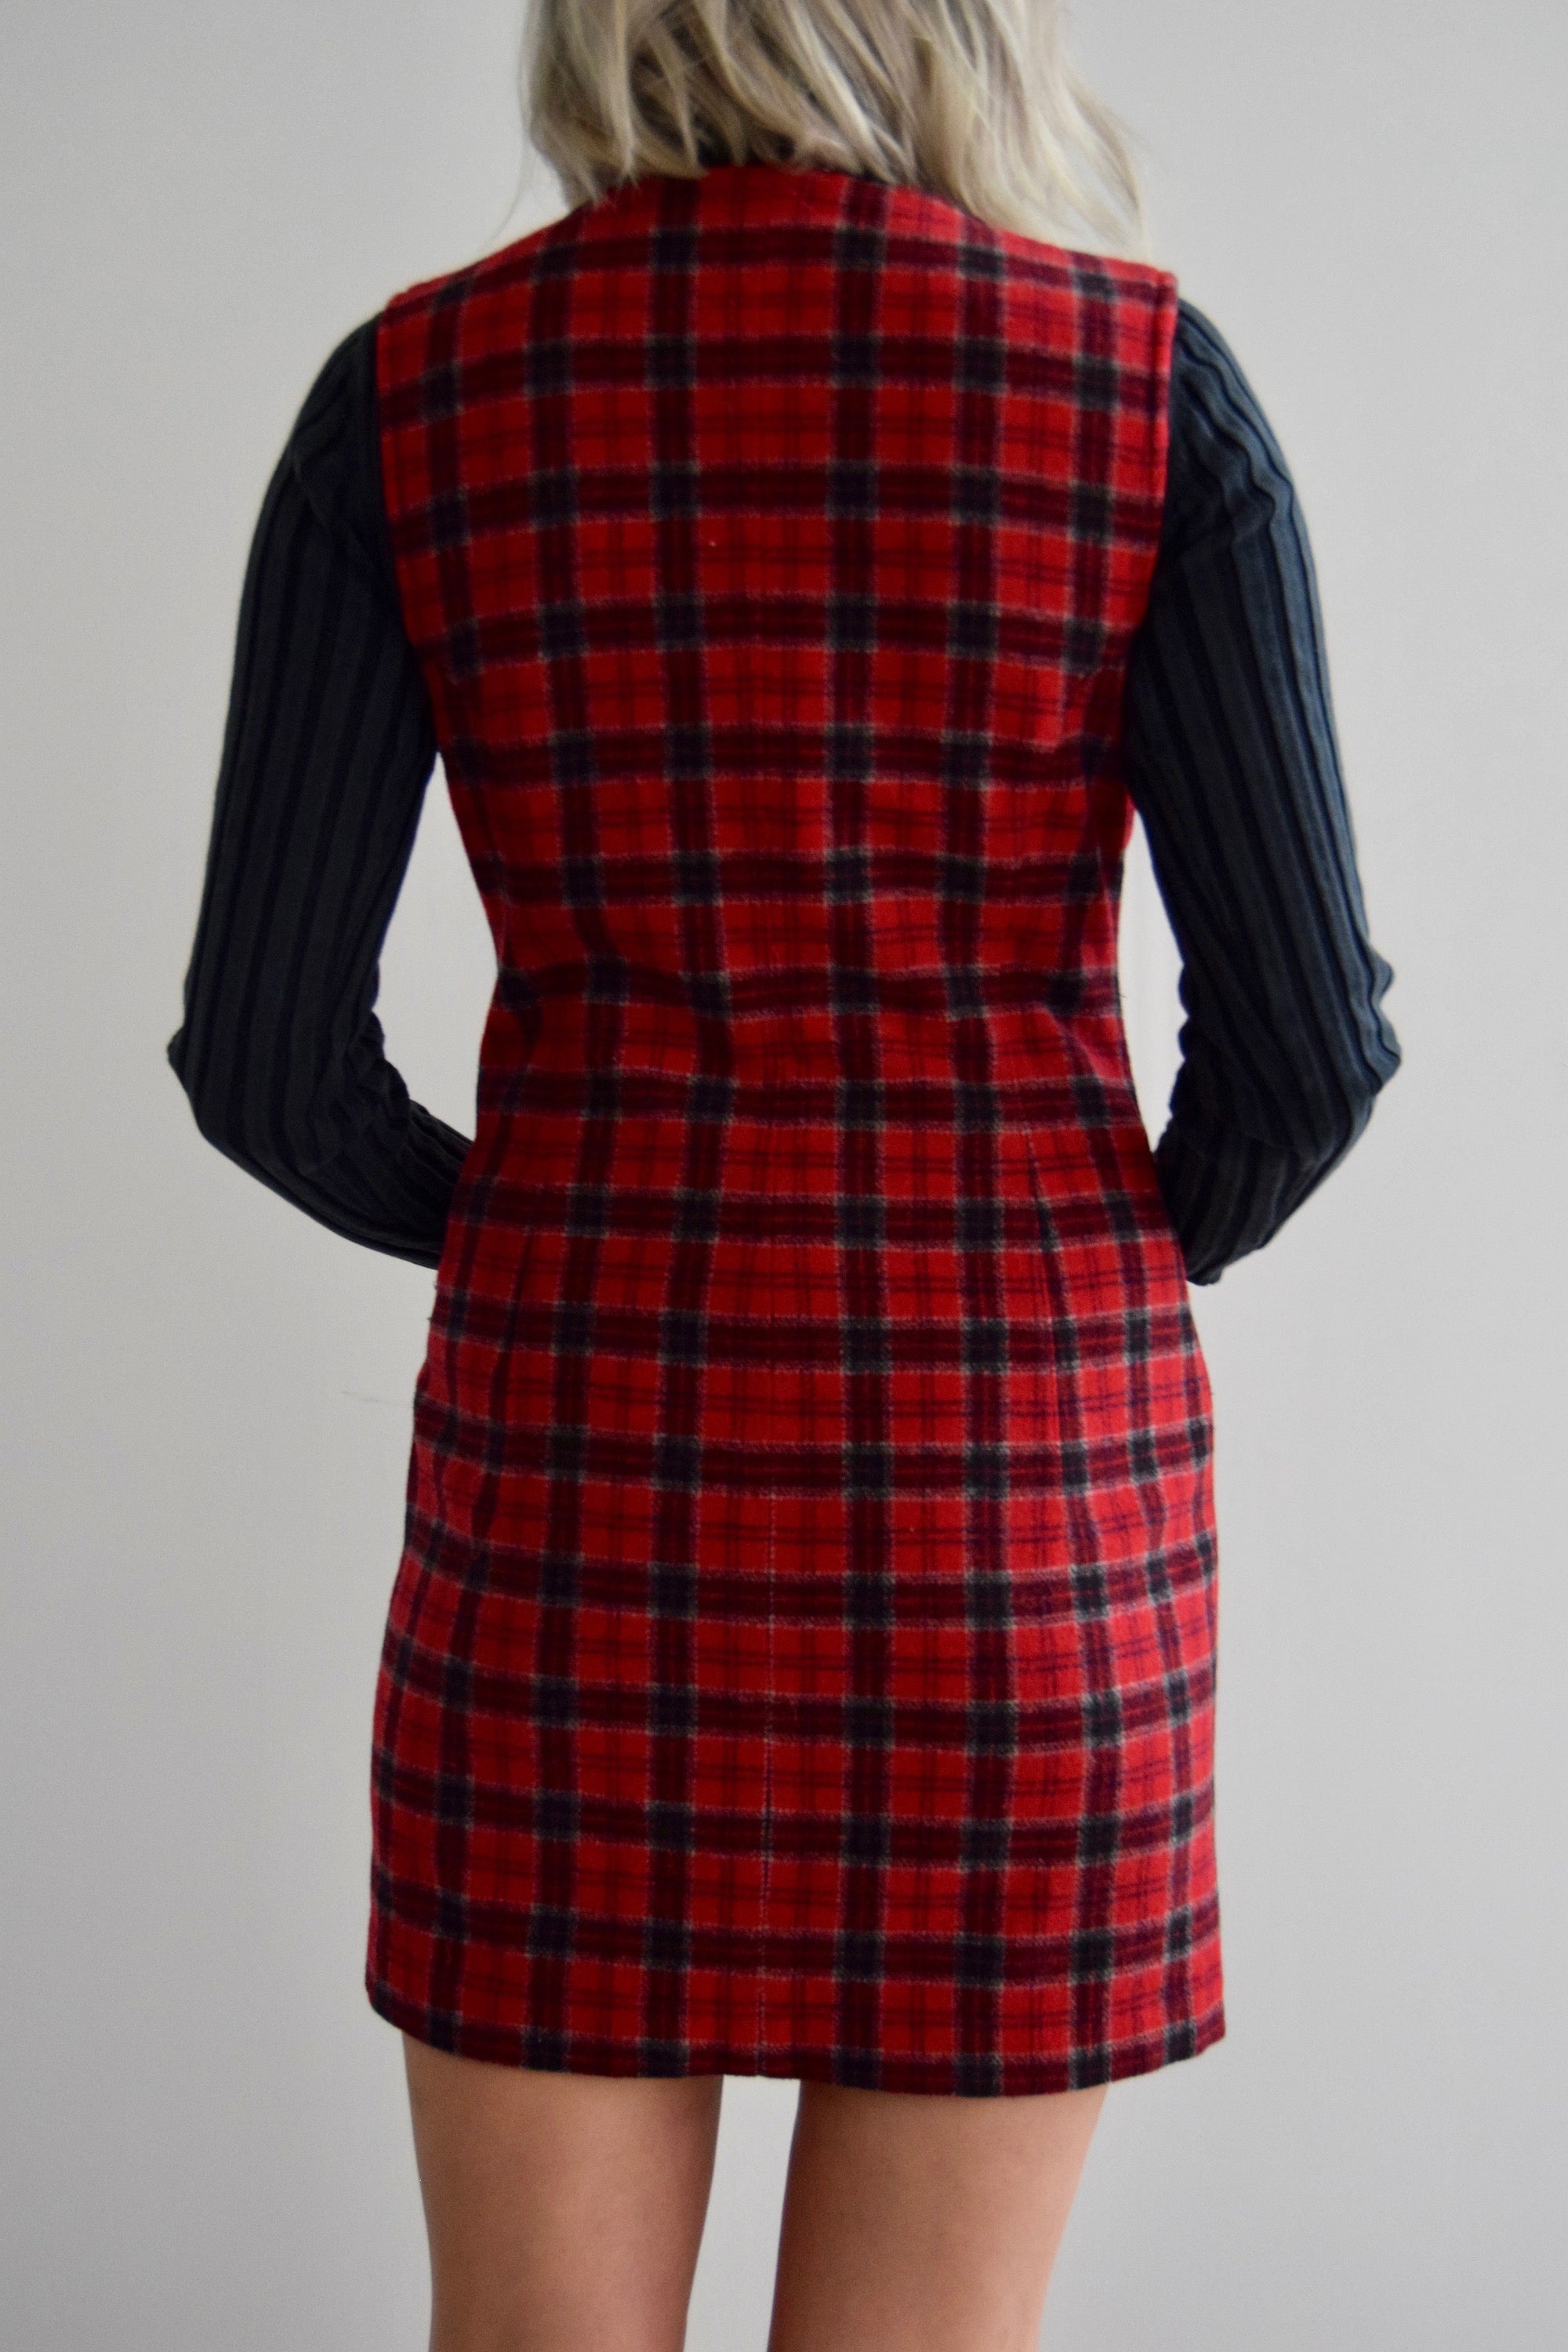 Vintage Red Plaid Eddie Bauer Wool Vest Dress